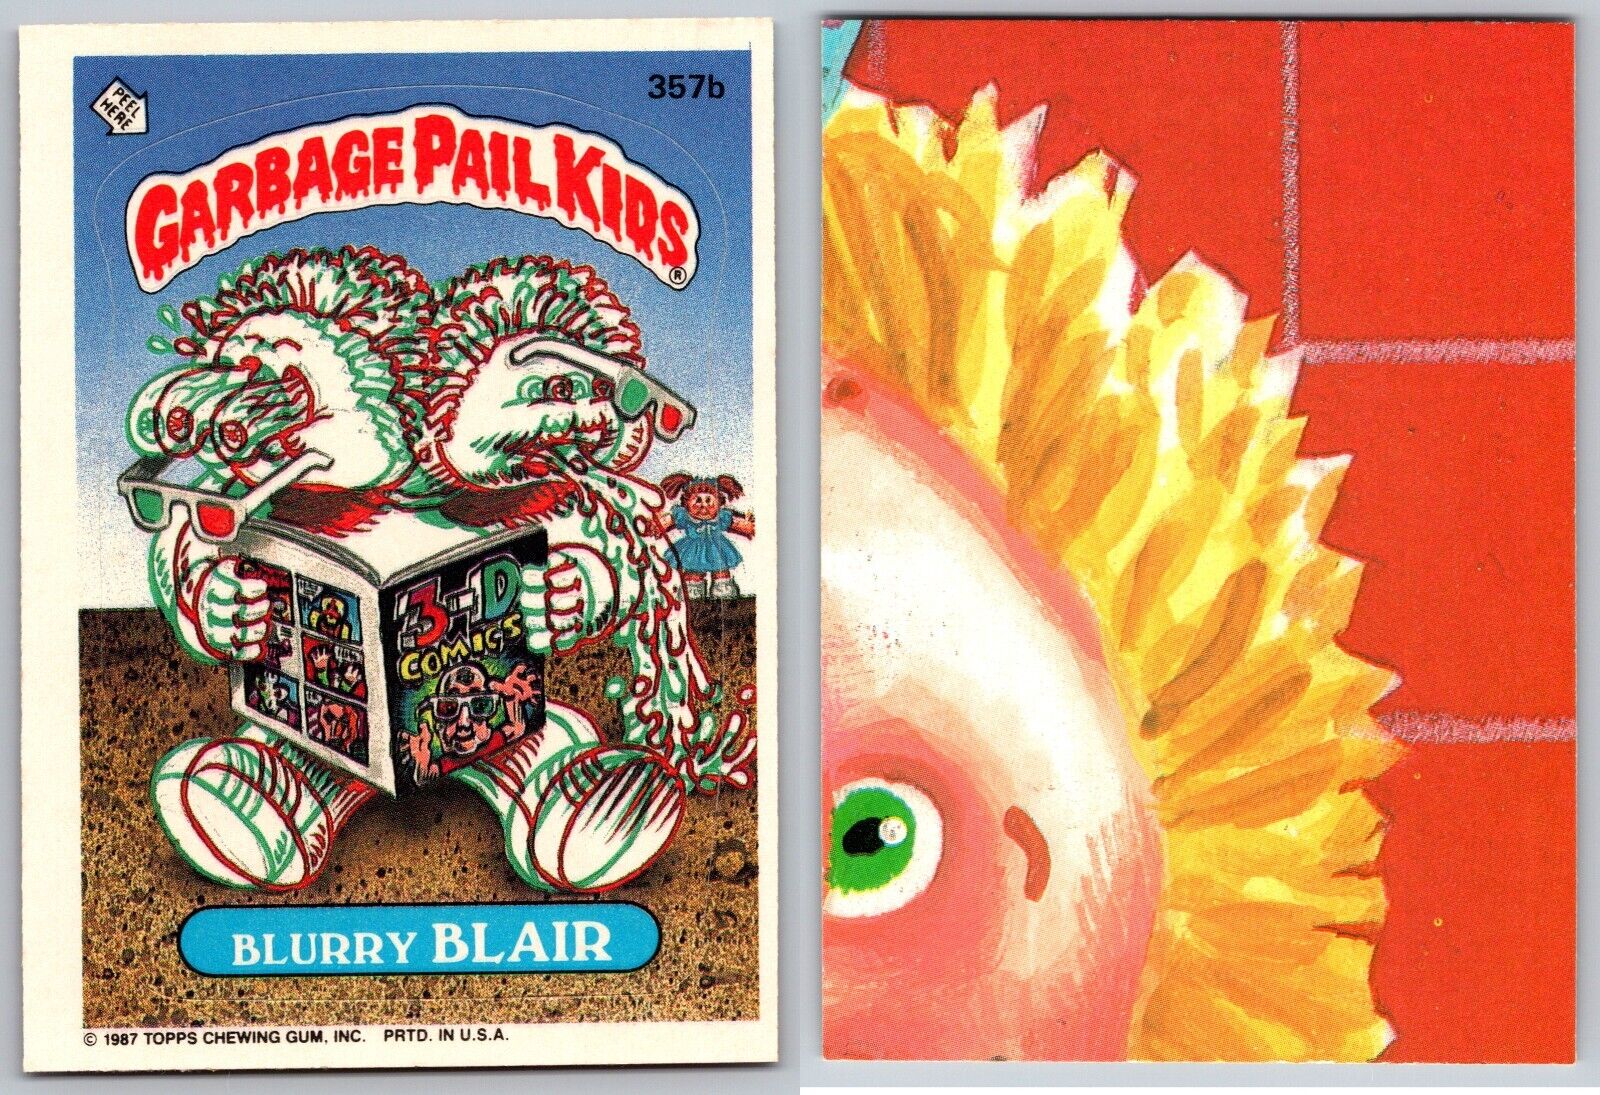 1987 Topps Garbage Pail Kids GPK Original Series 9 Card Blurry BLAIR 357b NM